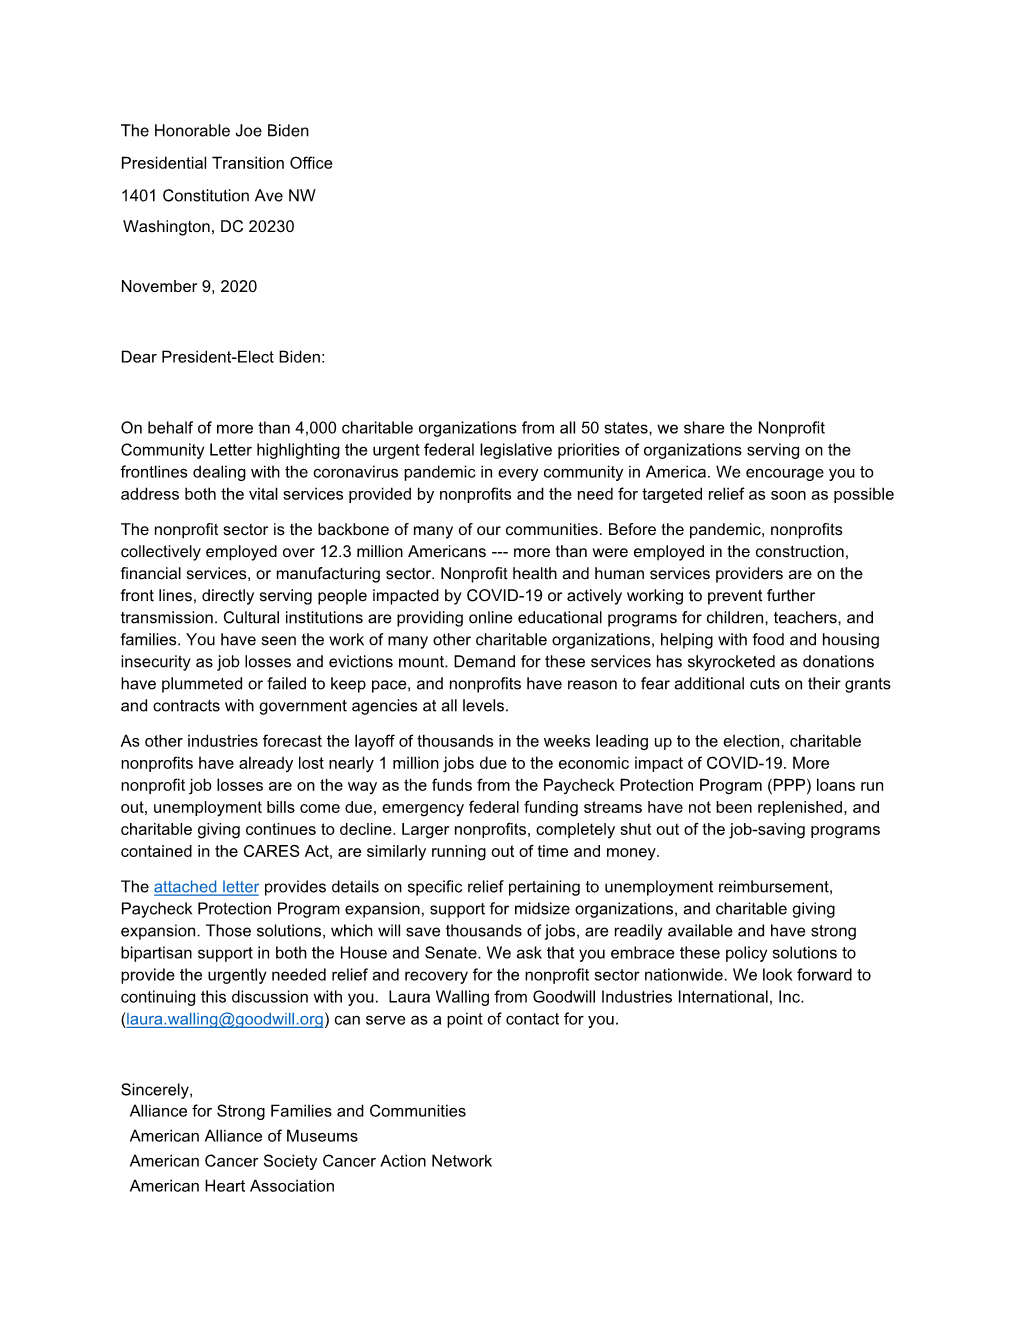 Letter to Biden Transition Team Re Nonprofit Relief